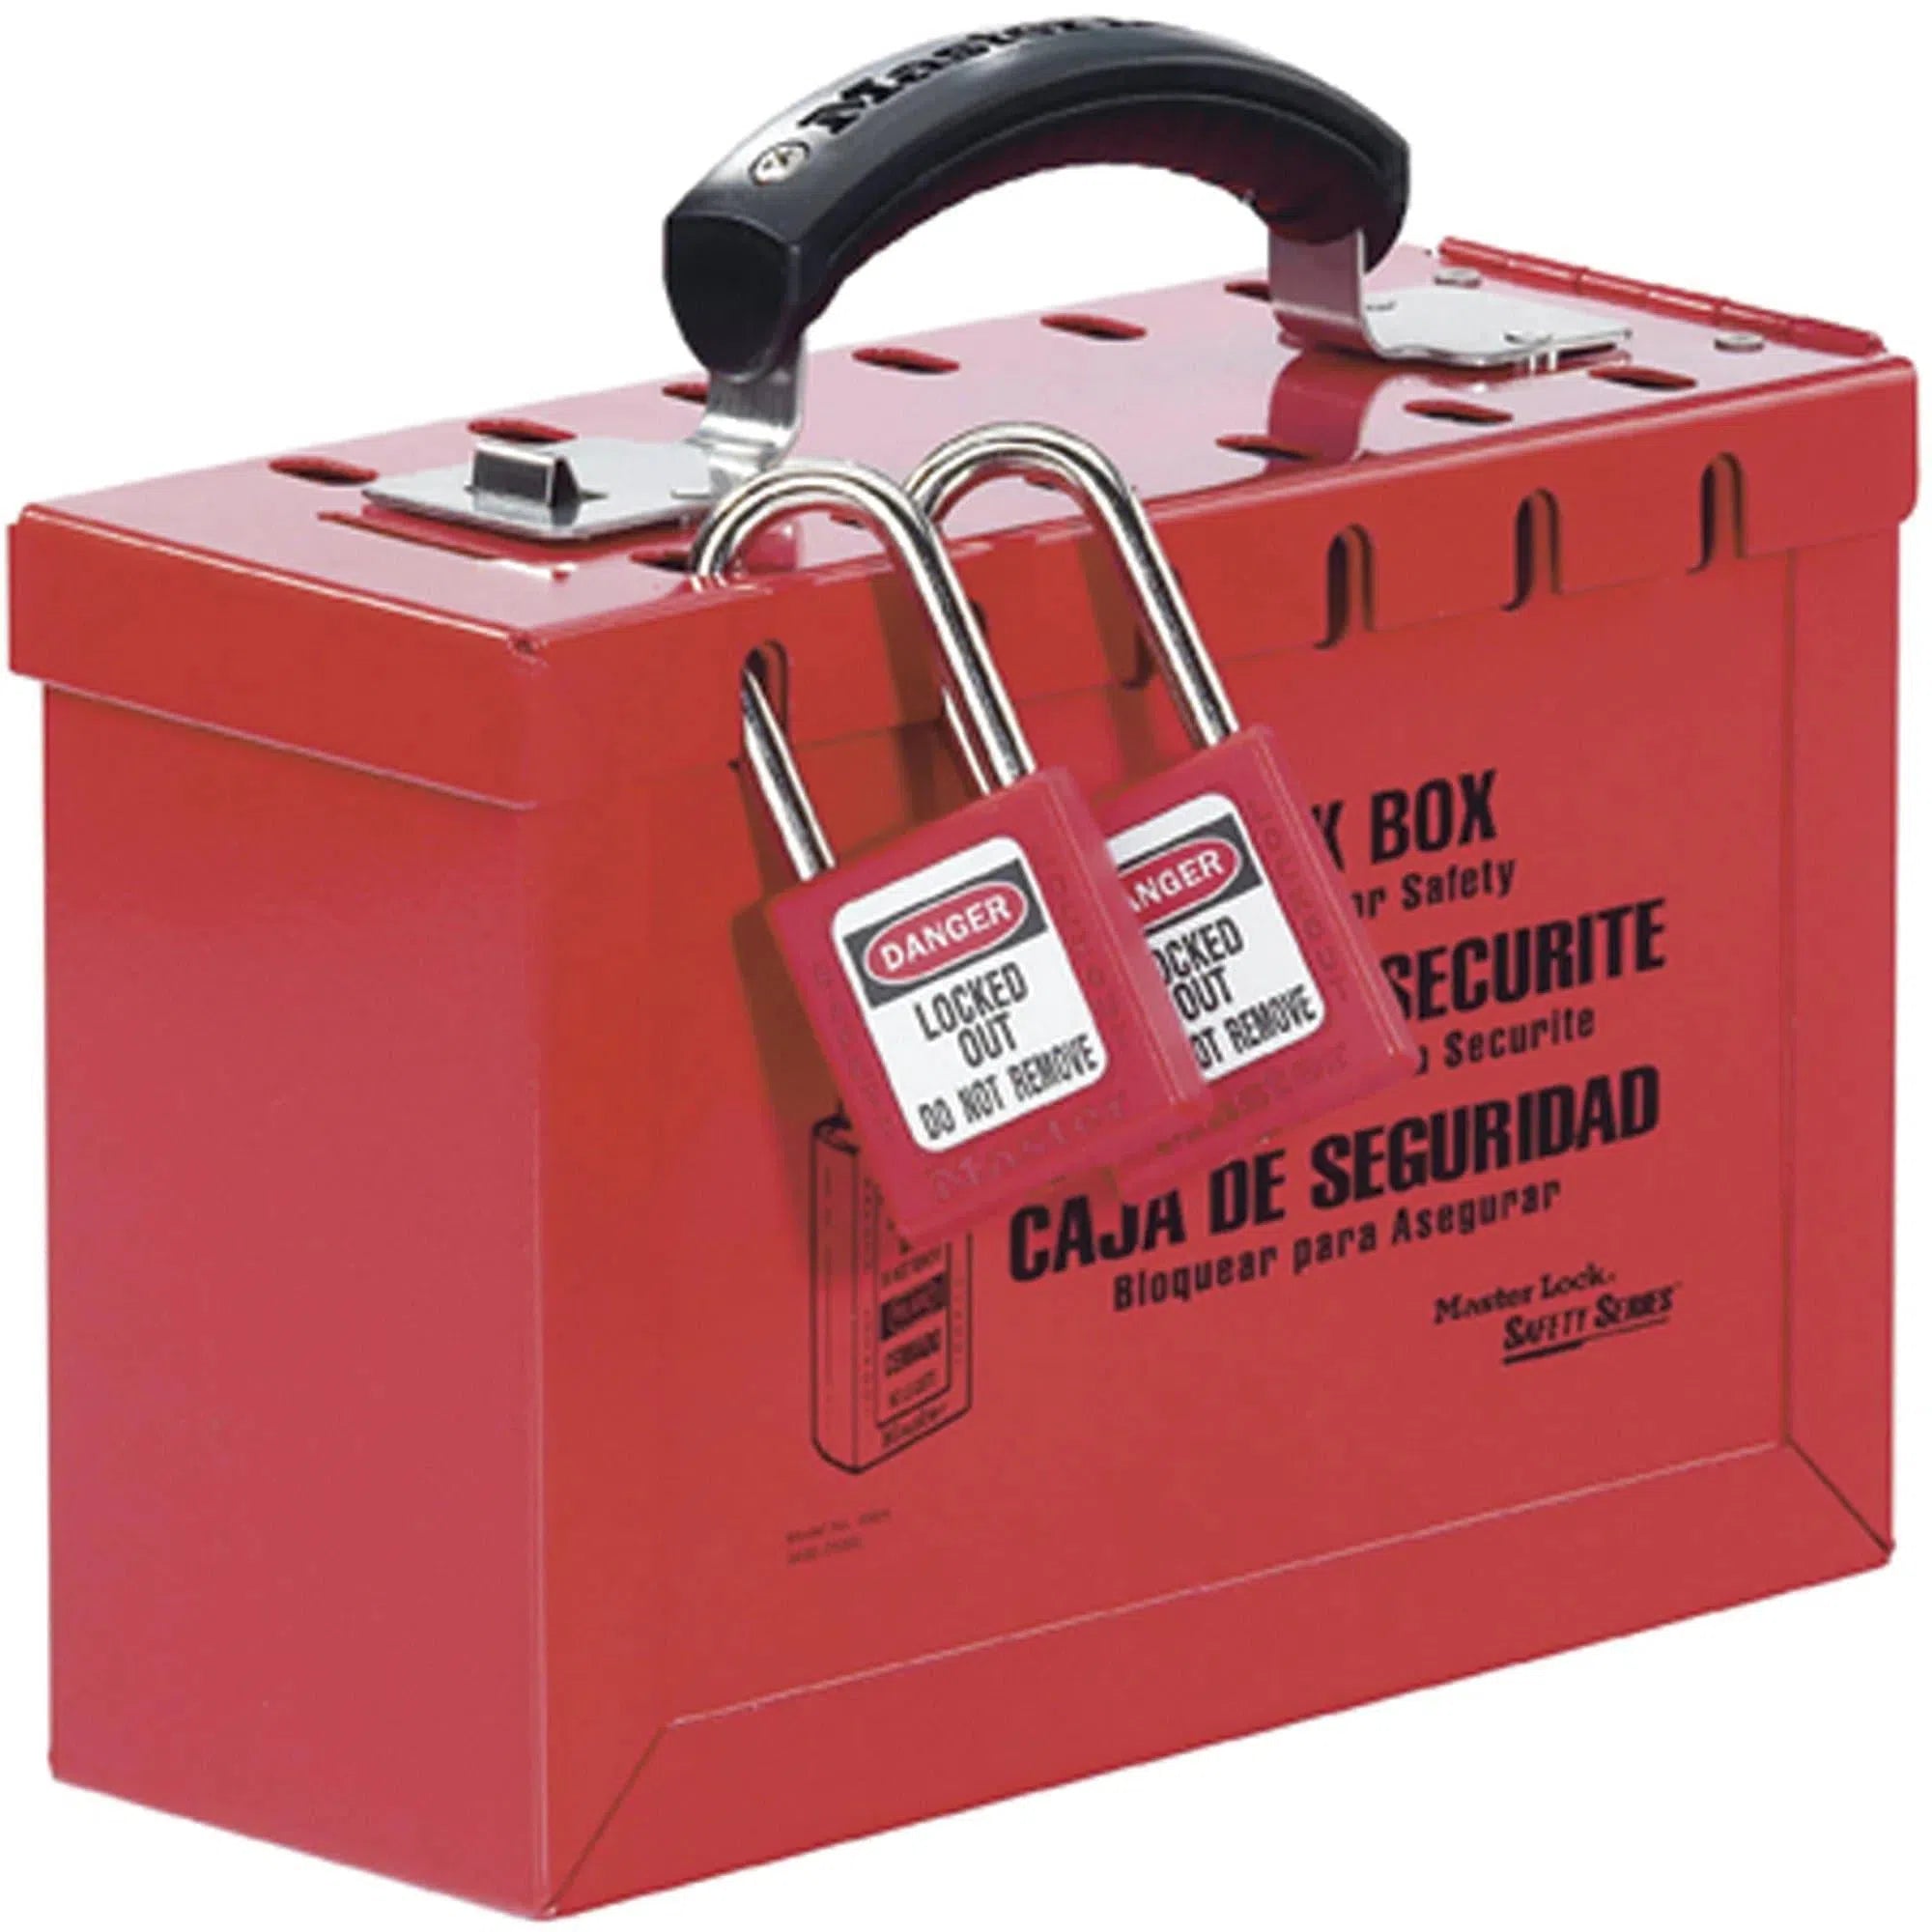 Portable lock box